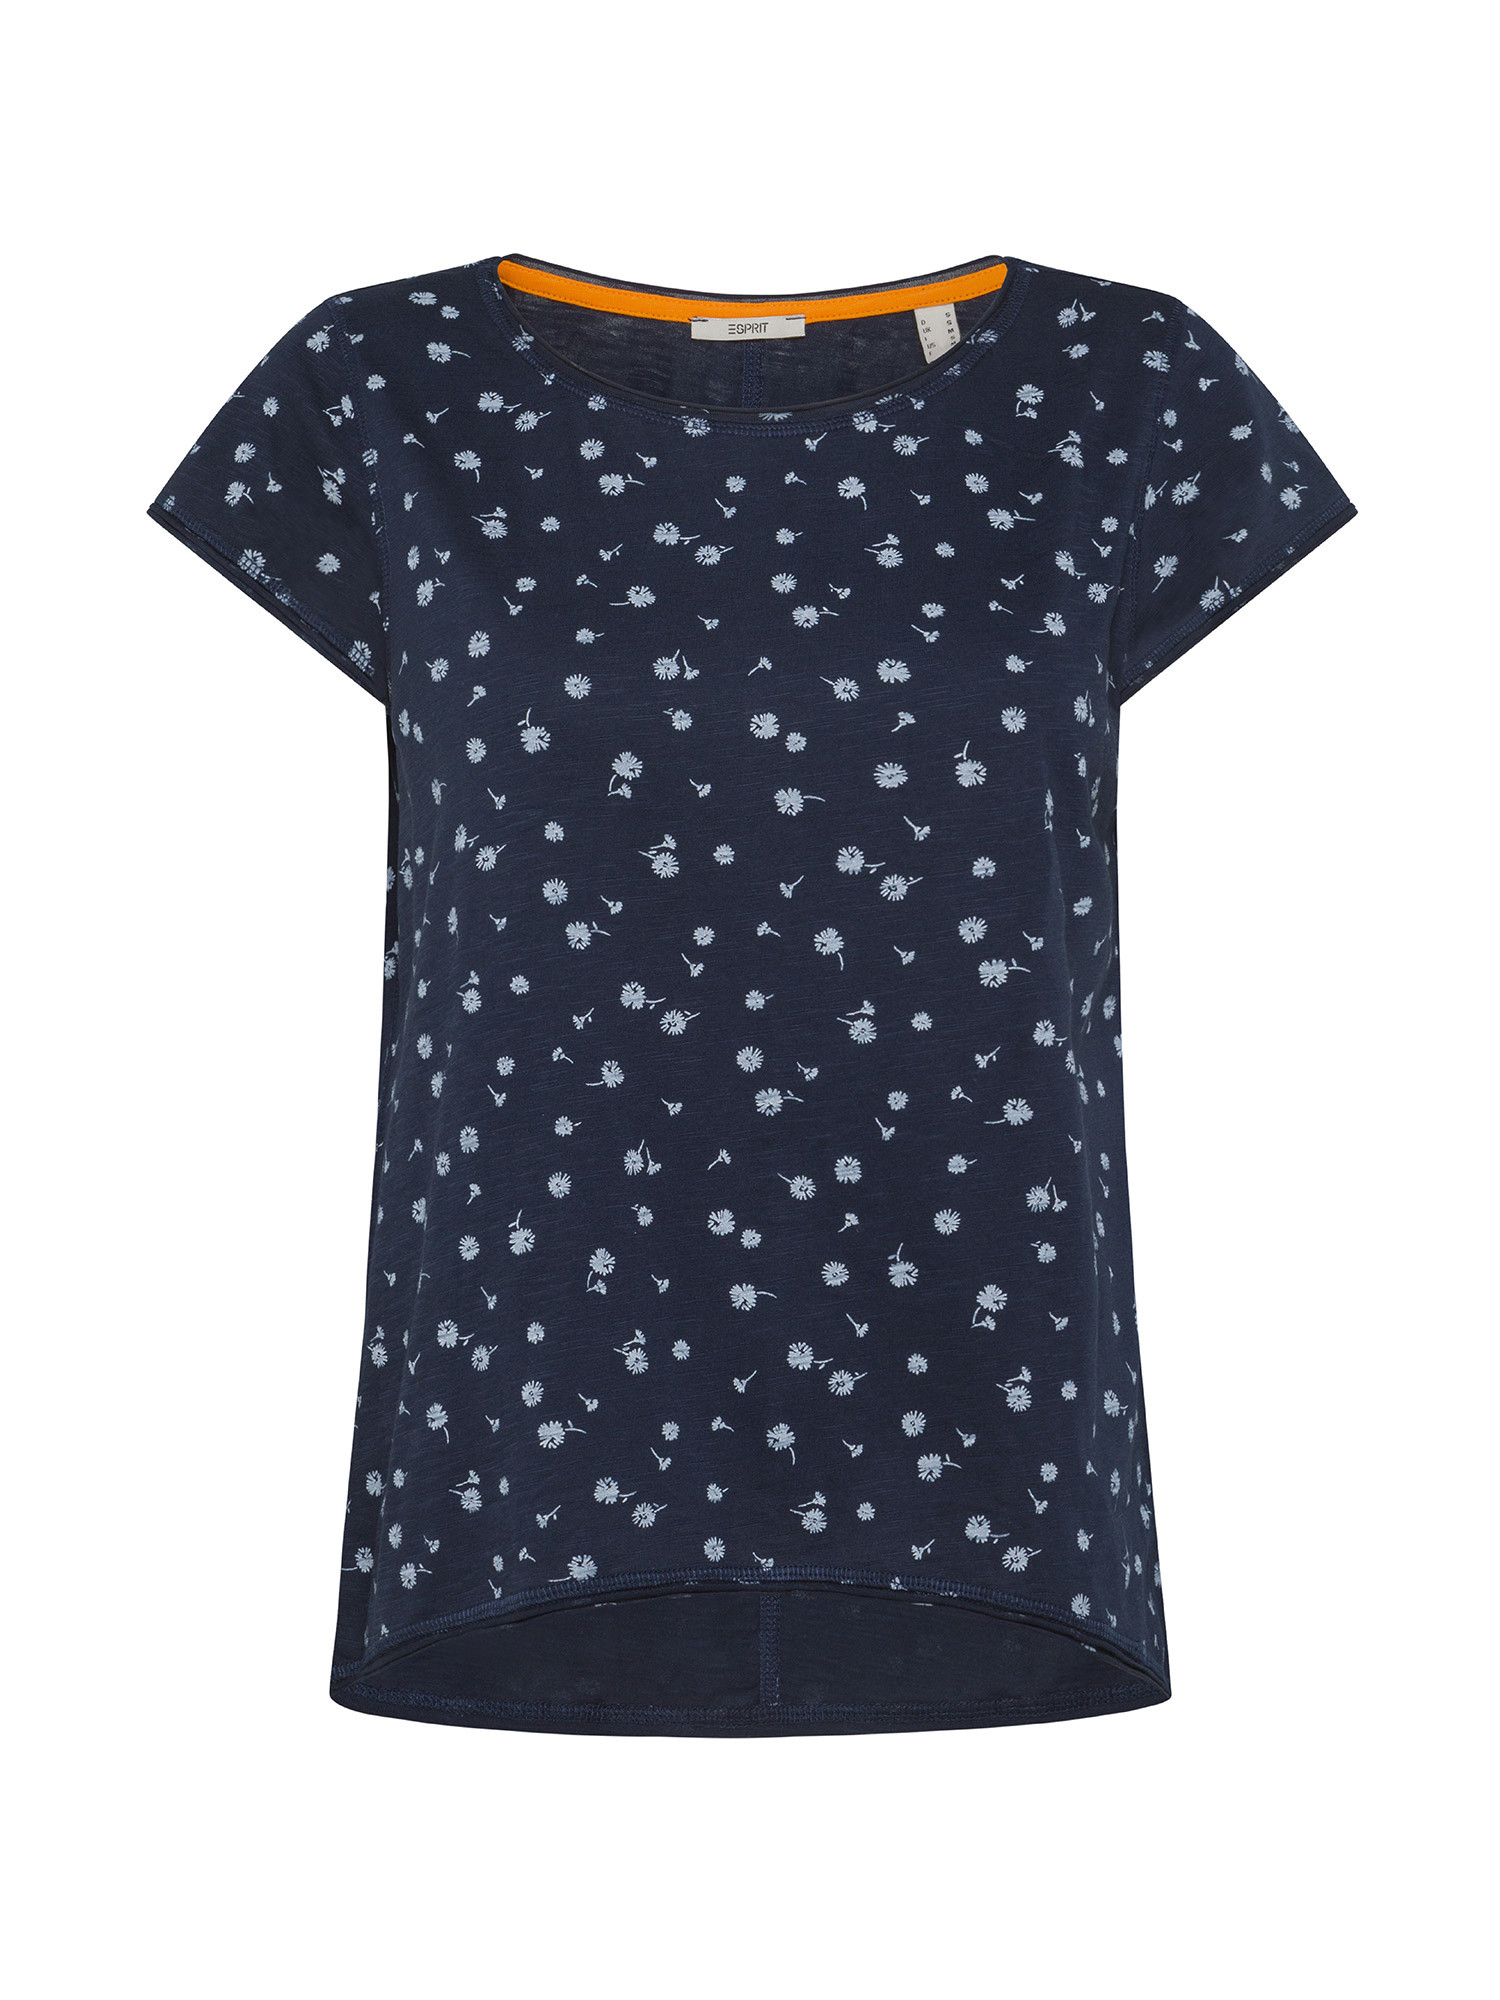 Esprit - T-shirt con stampa, Blu scuro, large image number 0